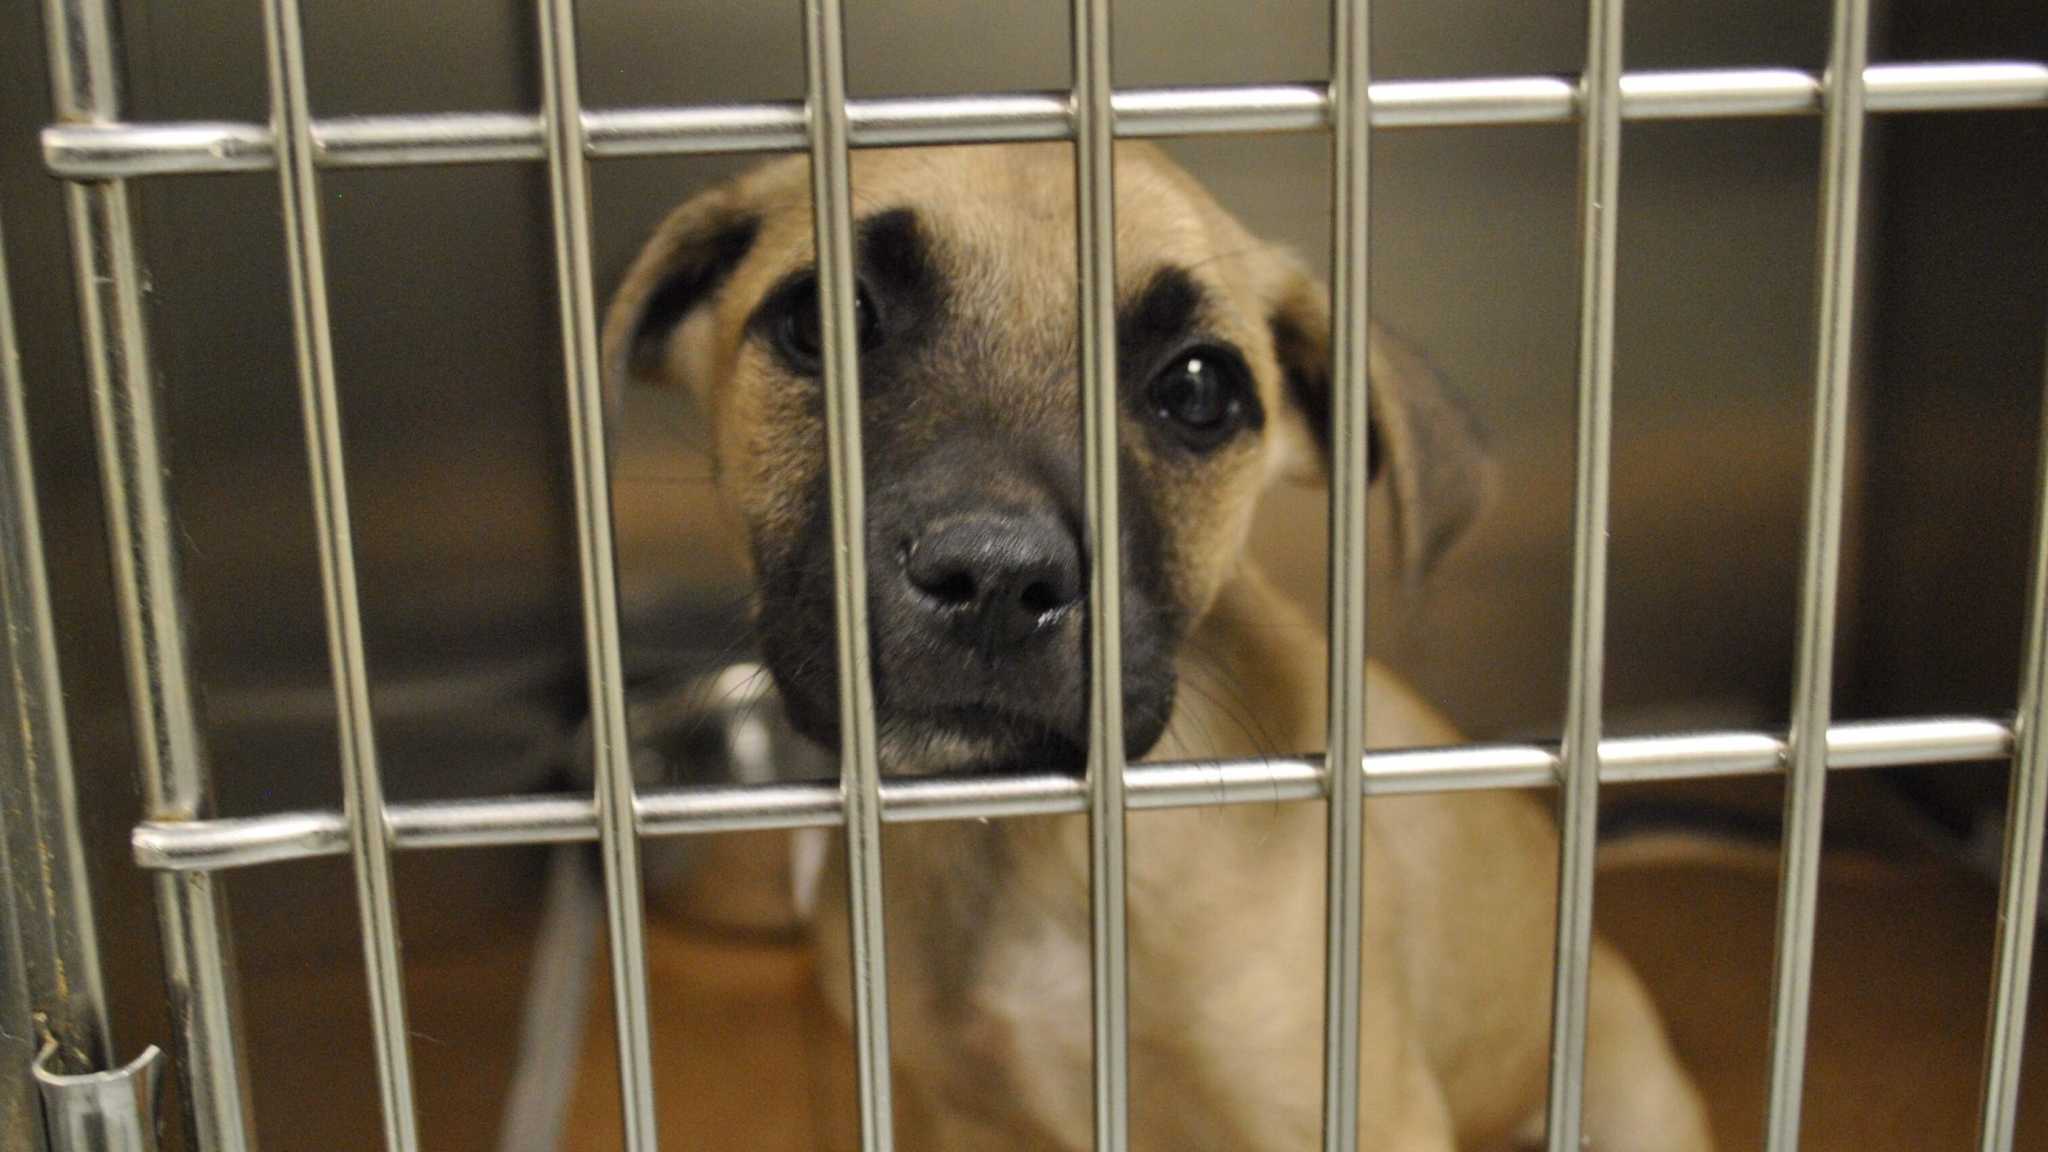 Crowded Pasadena animal shelter waives adoption fees through Friday